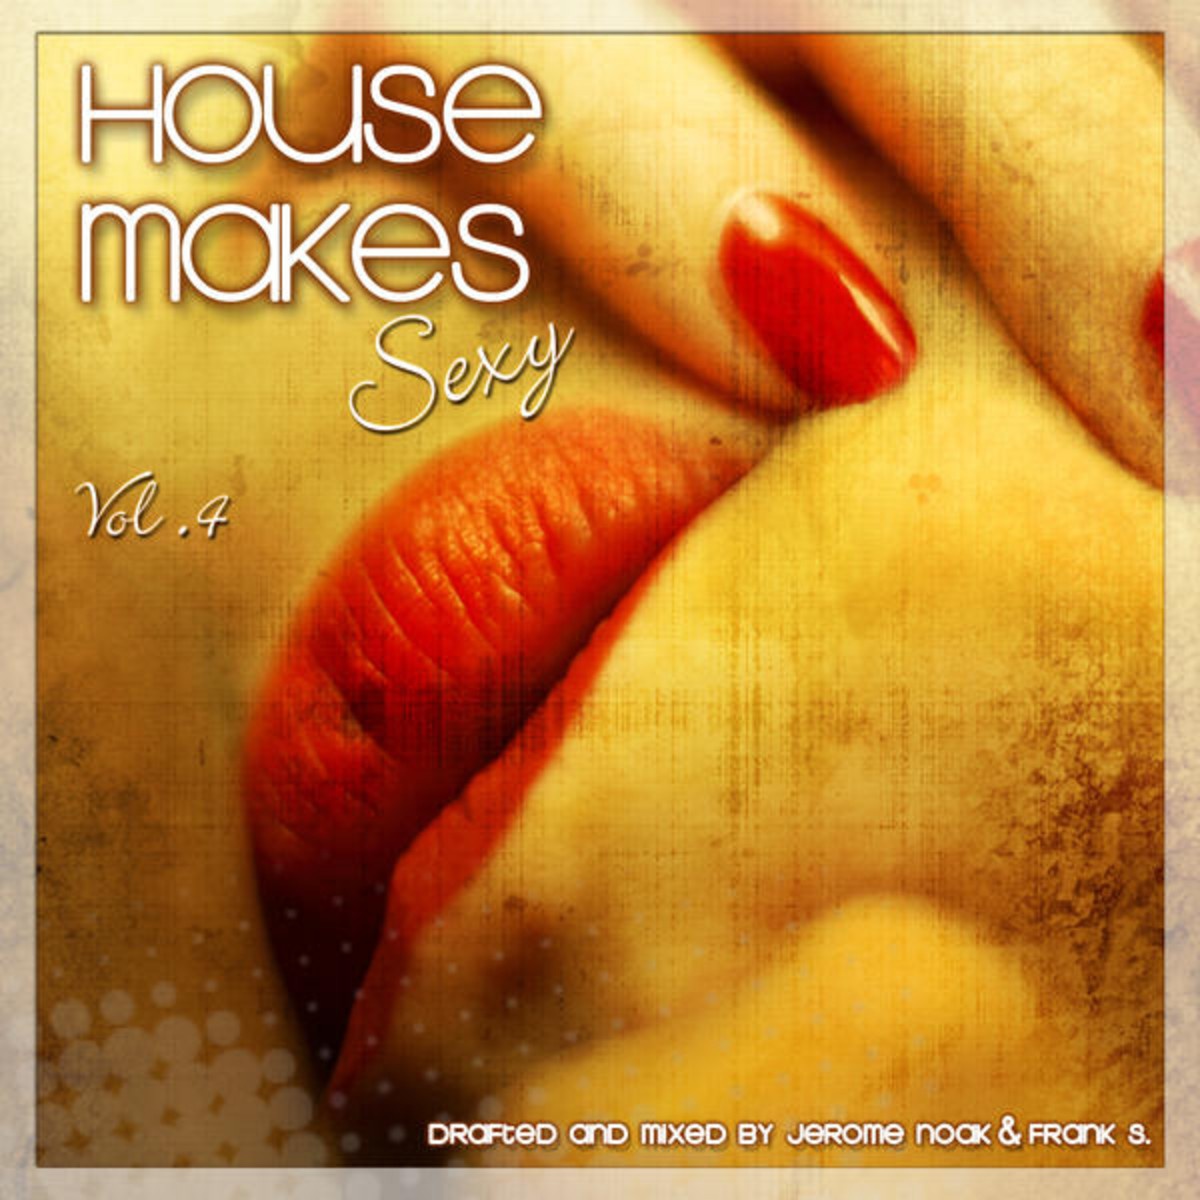 House Makes Sexy Vol. 4 - Continious Dj Mix by Jerome Noak